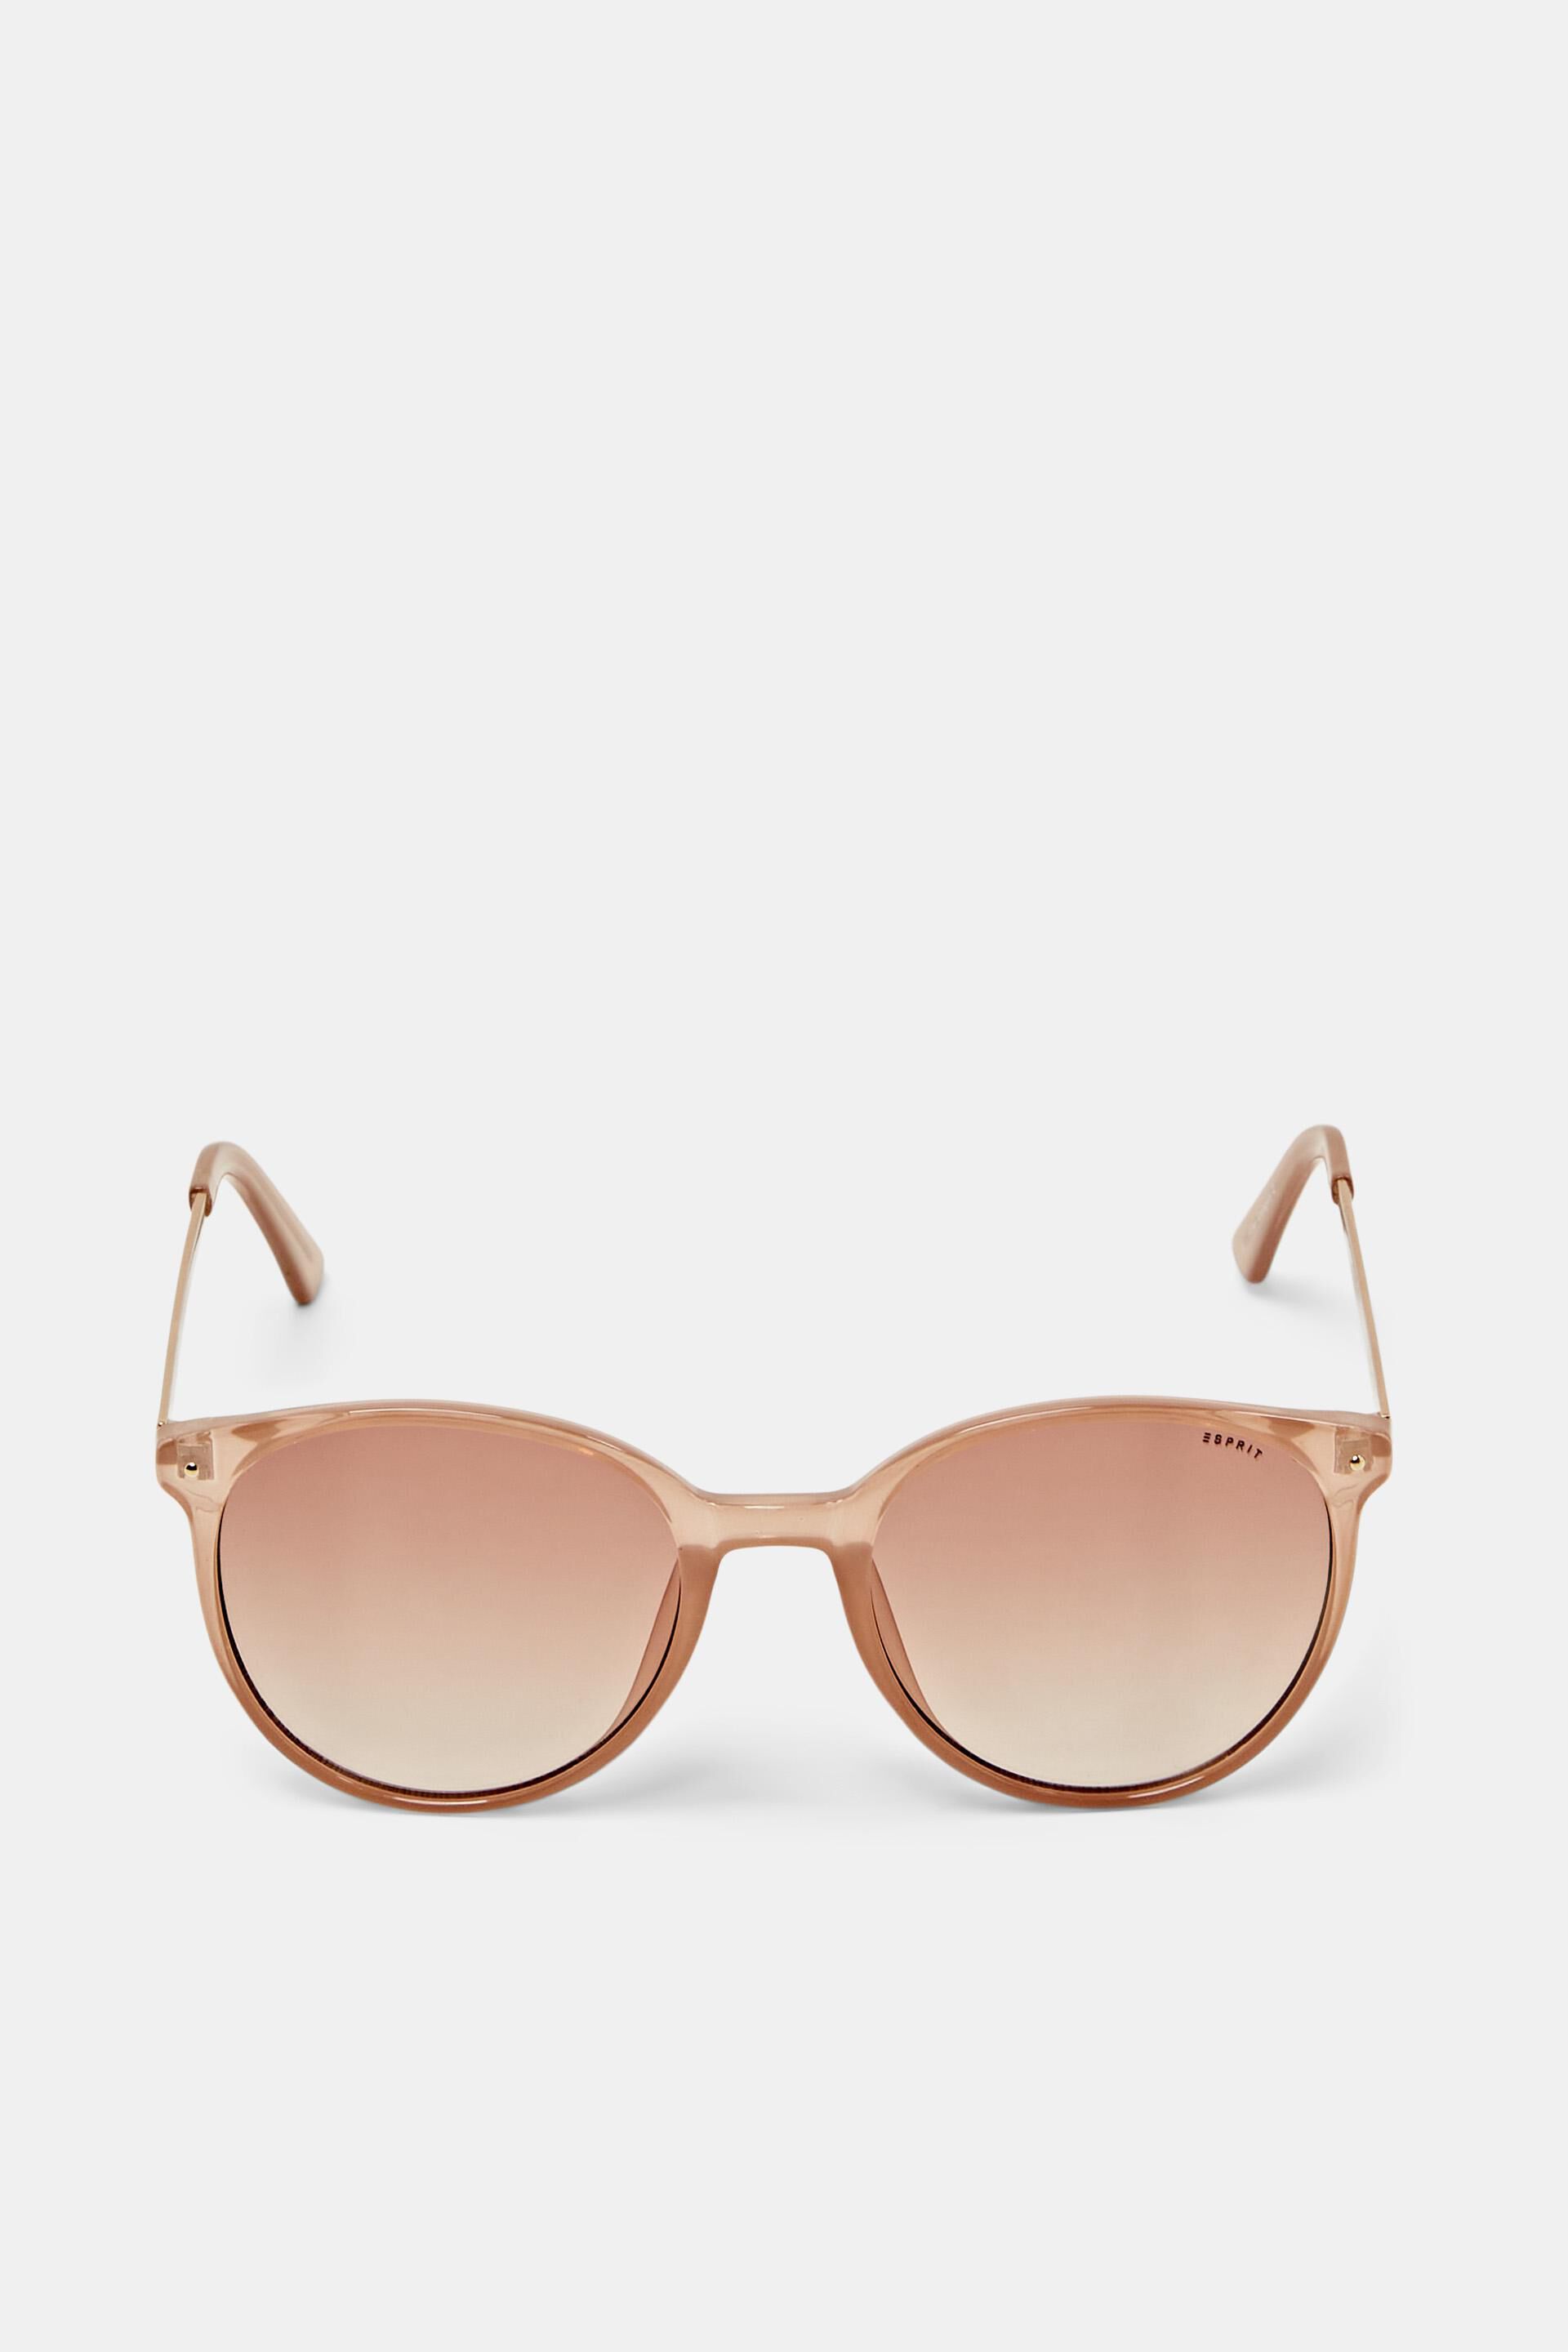 Esprit framed Round sunglasses